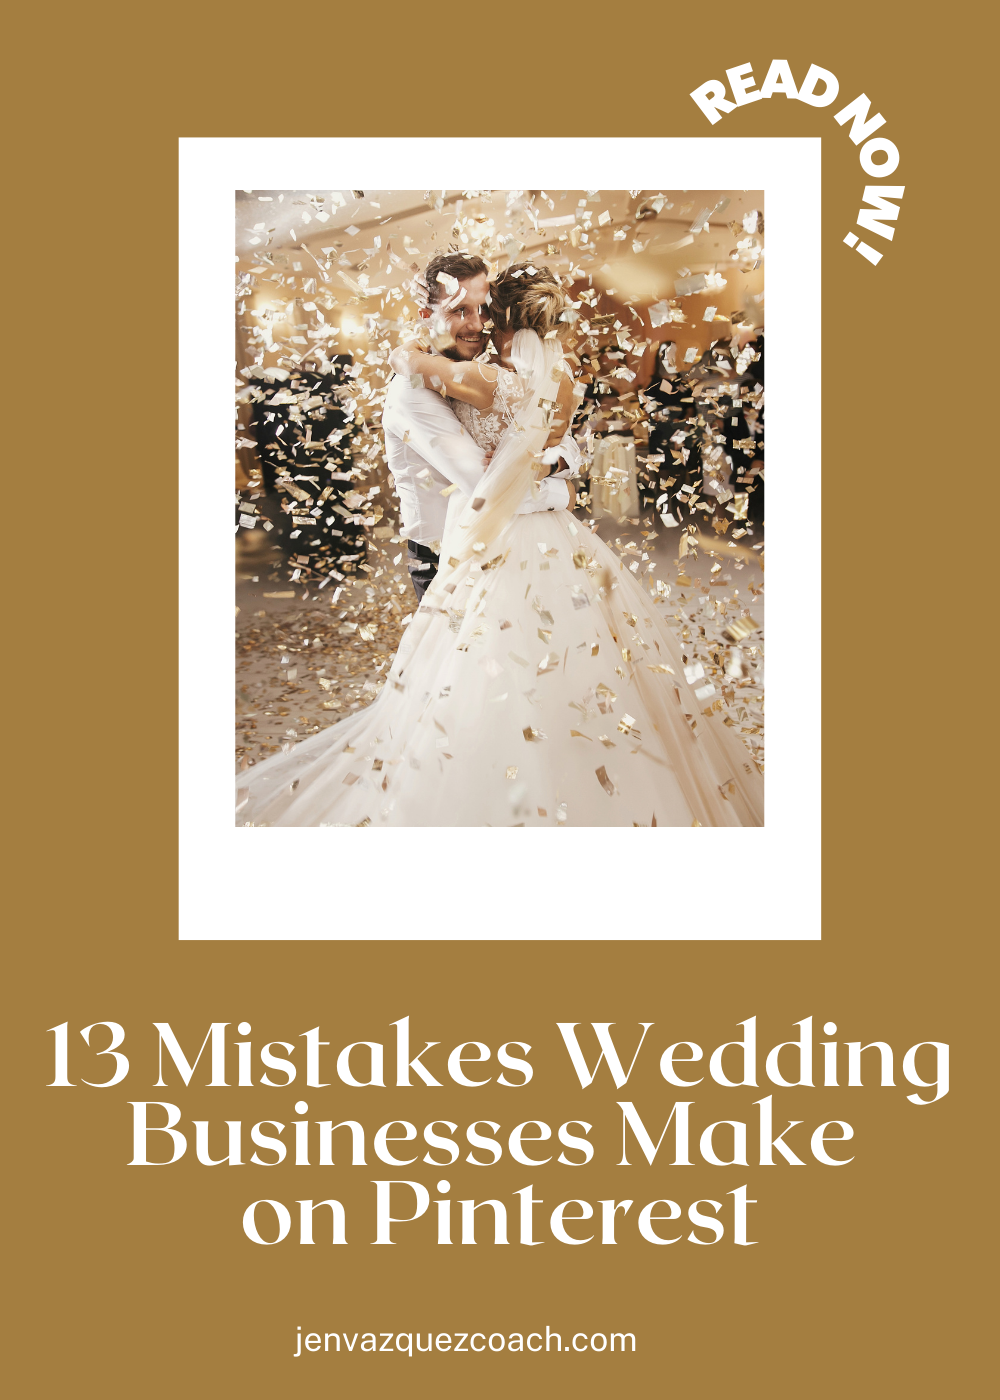 13 Mistakes Wedding Pros Make on Pinterest | Jen Vazquez media Pinterest Marketing